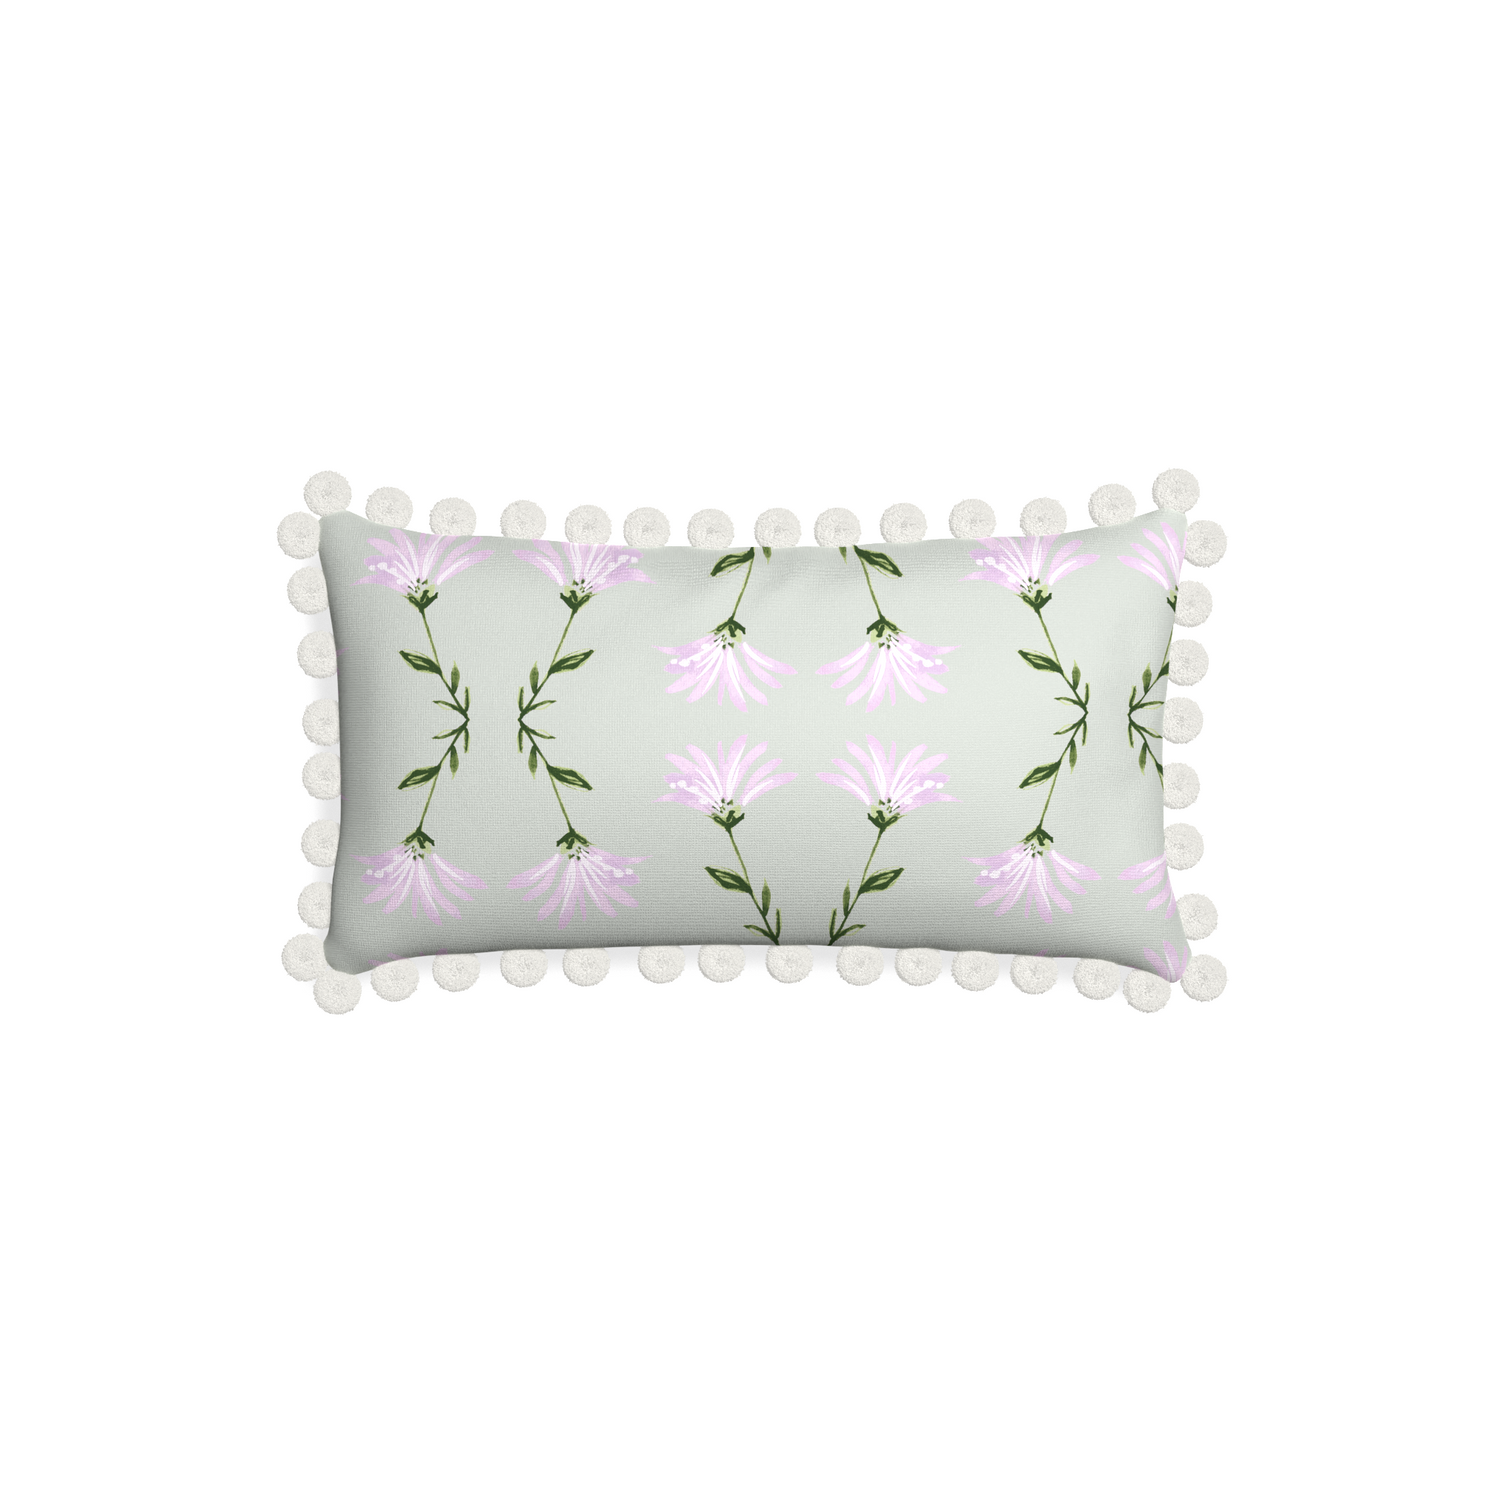 Lumbar marina sage custom pillow with snow pom pom on white background